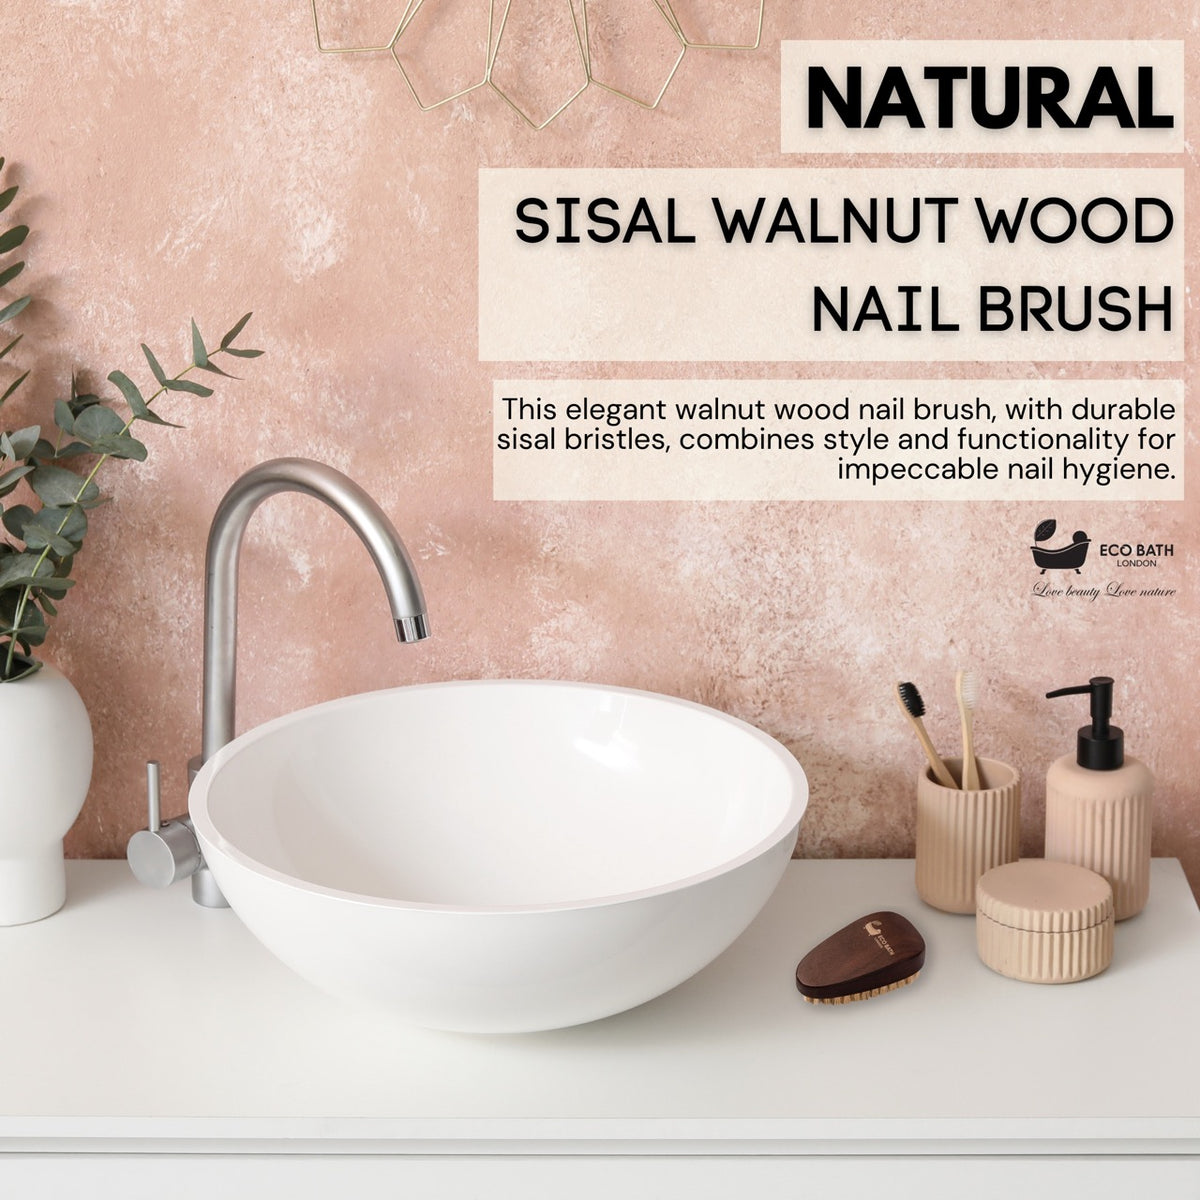 Eco Bath Natural Sisal Walnut Wood Nail Brush